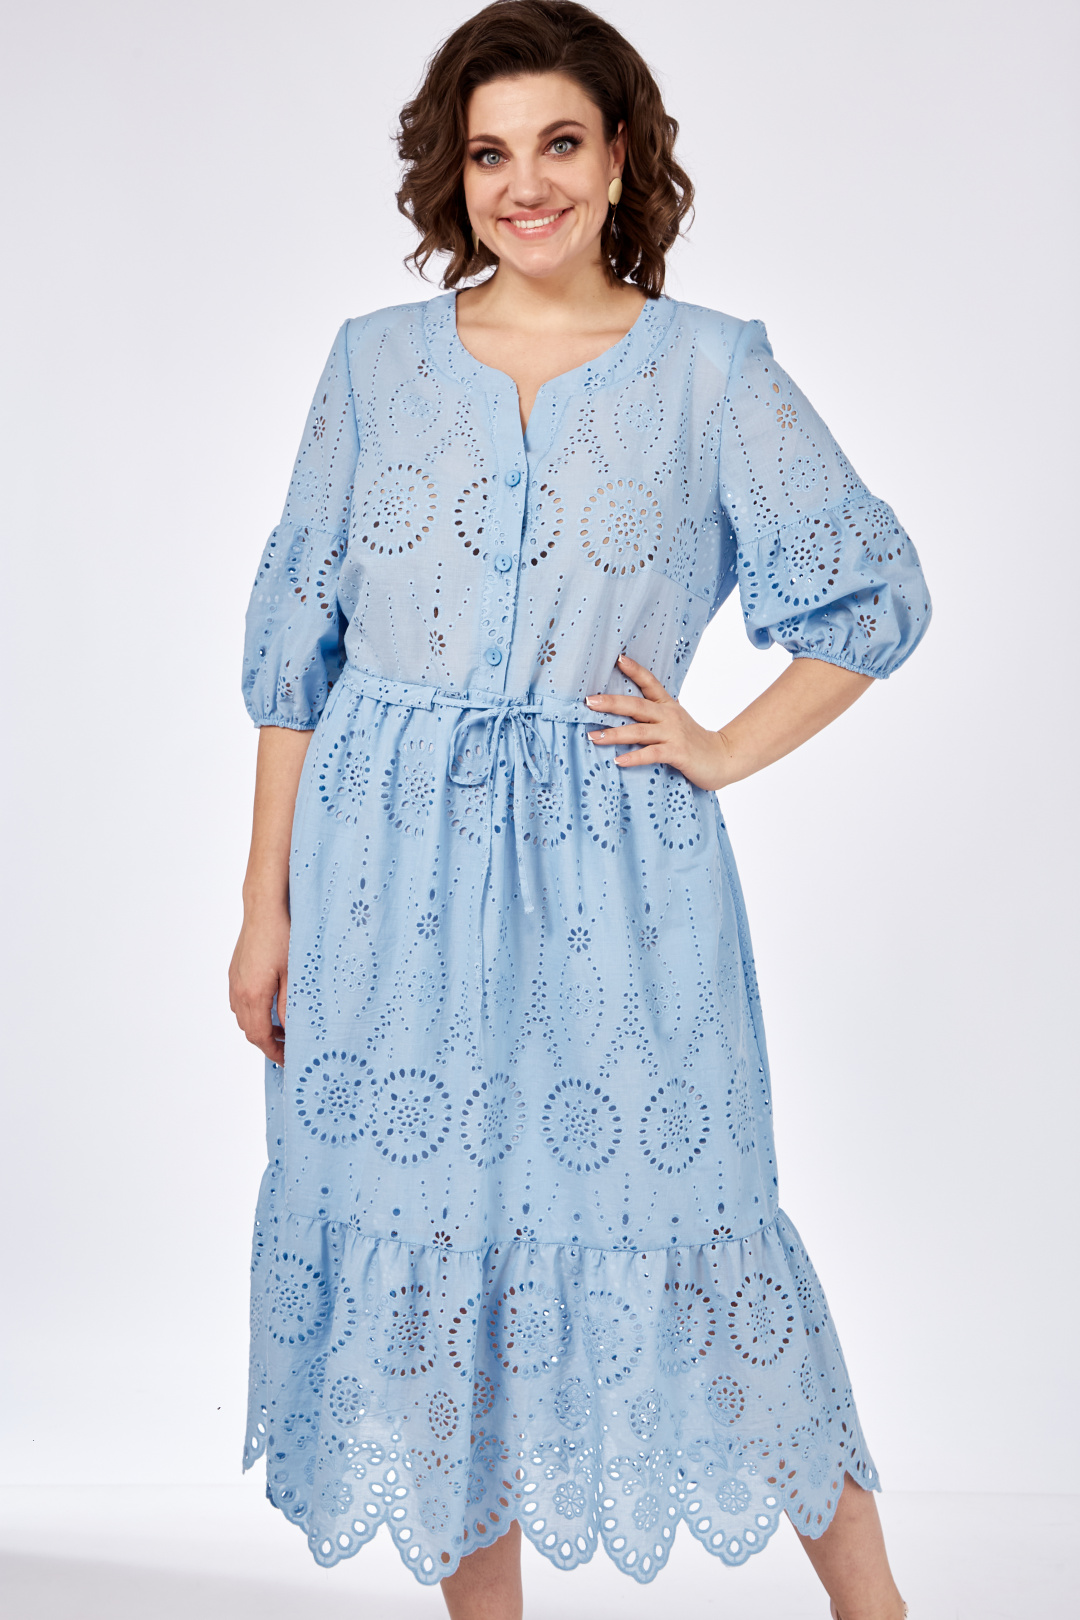 Платье Элль-стиль 2285 голубой